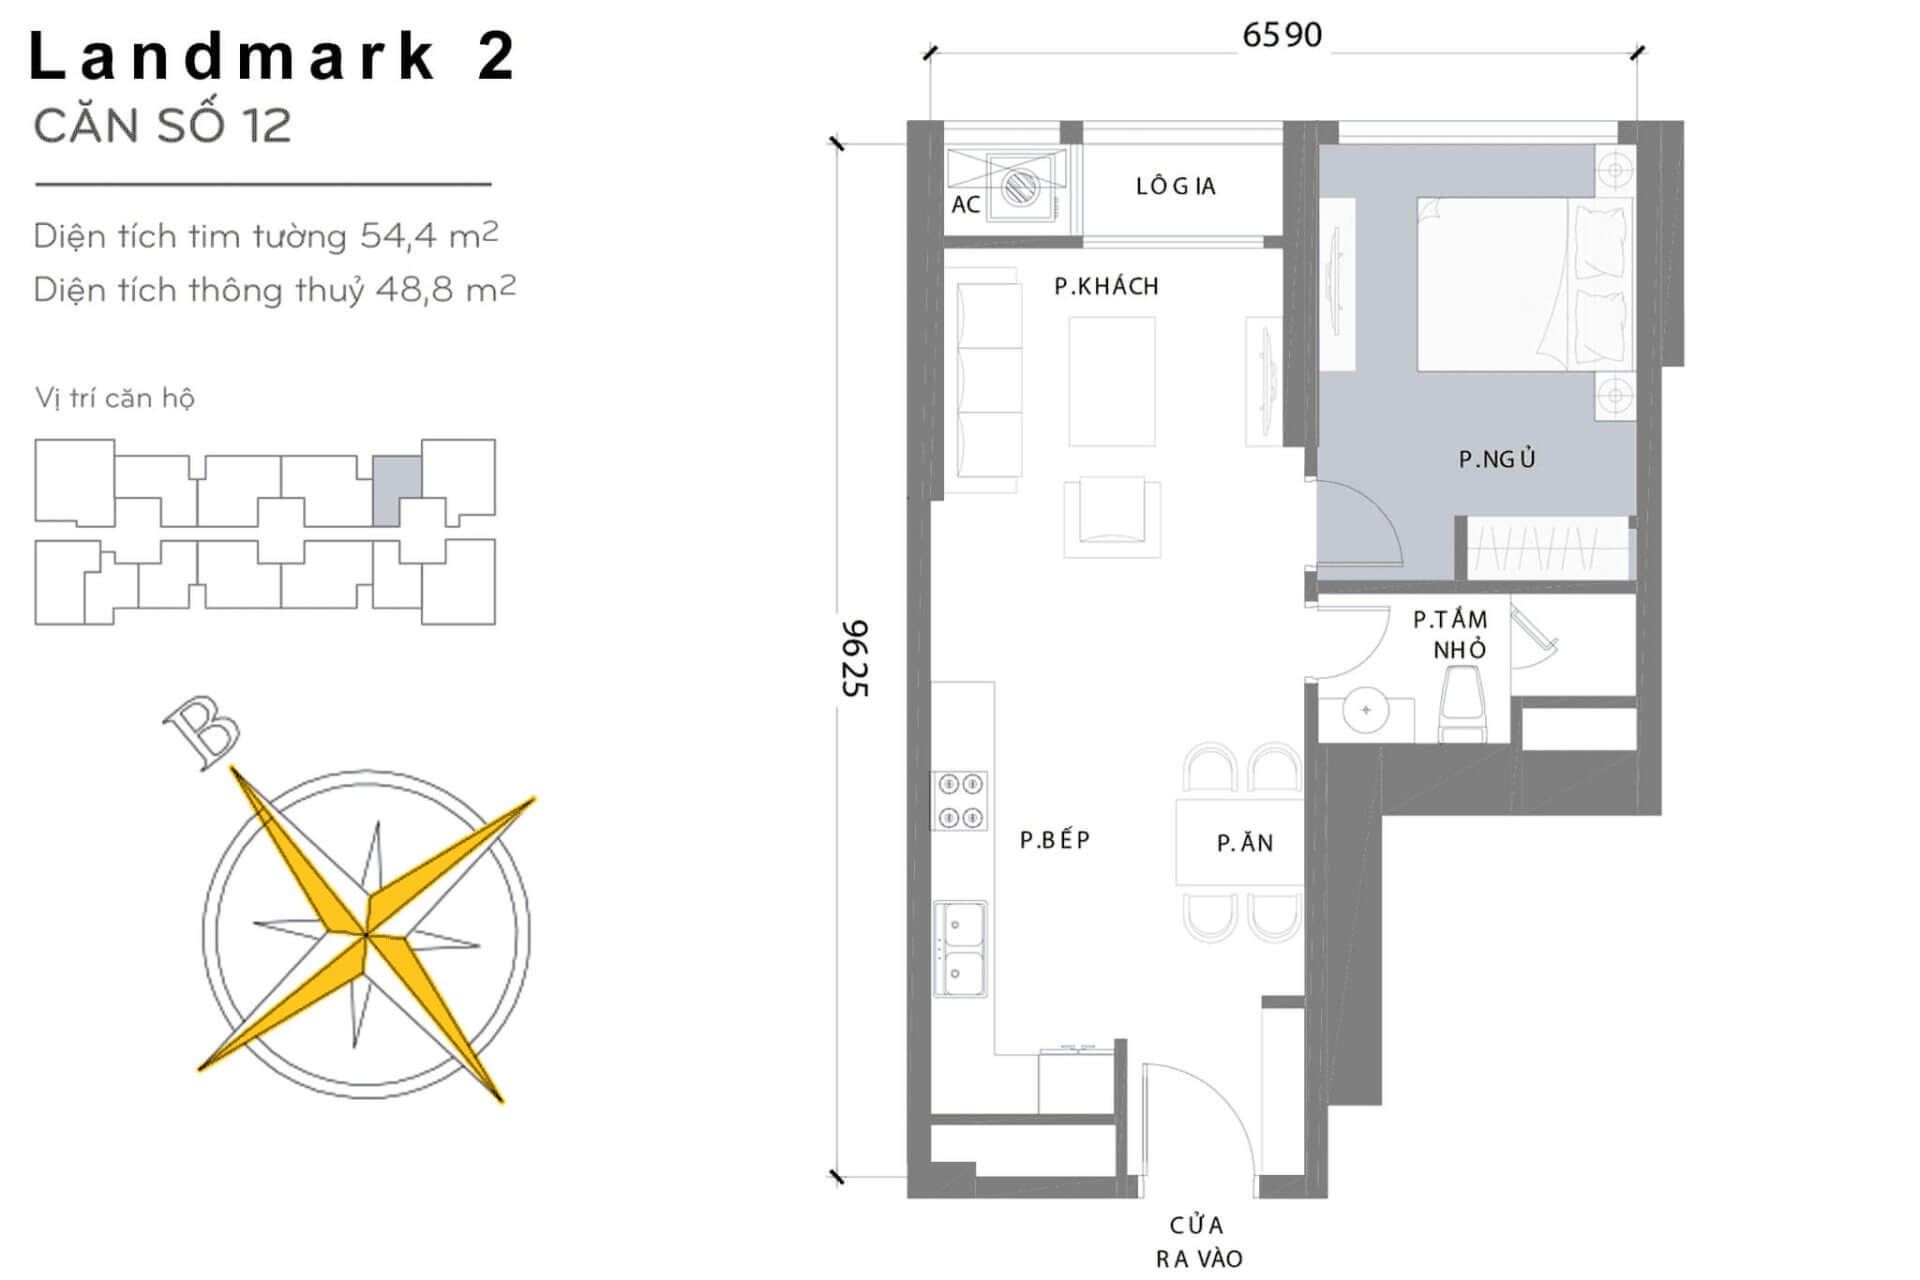 layout căn hộ số 12 Landmark 2 L2-12